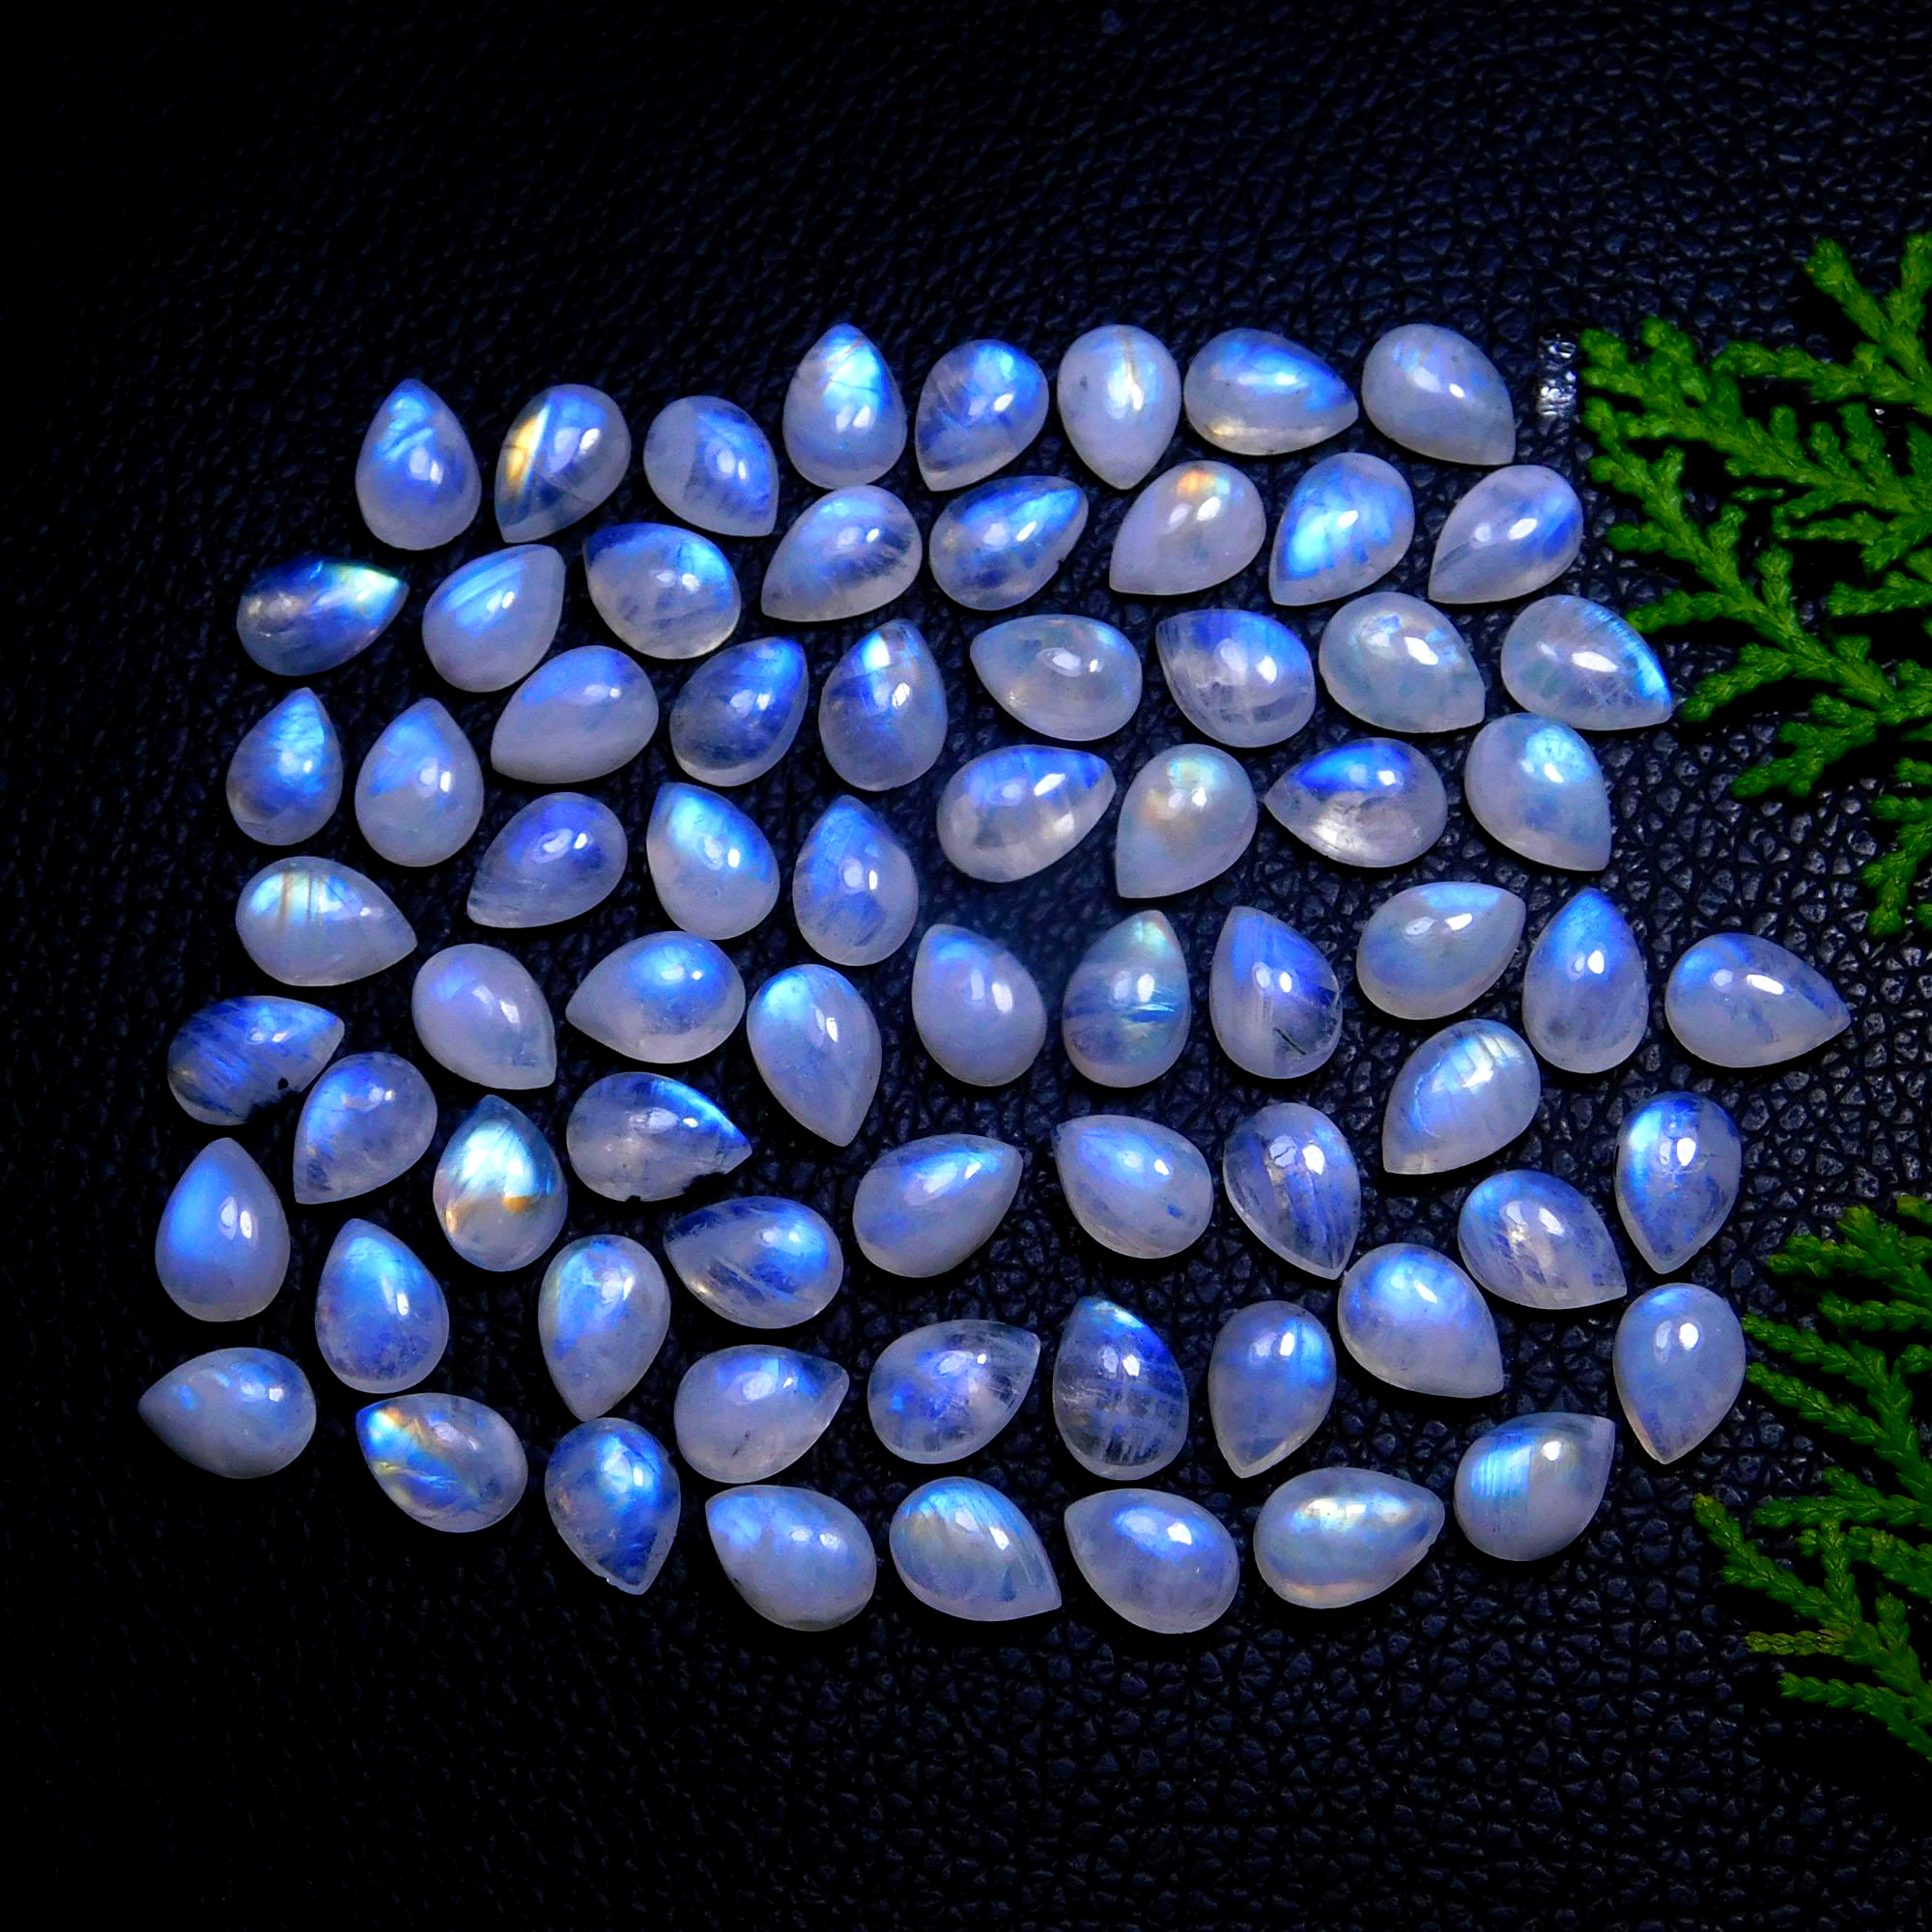 70Pcs 164Cts Natural Rainbow Moonstone Pear Shape Blue Fire Cabochon Lot Semi Precious Loose Gemstone Jewelry Supplies Crystal 10X7mm #9884